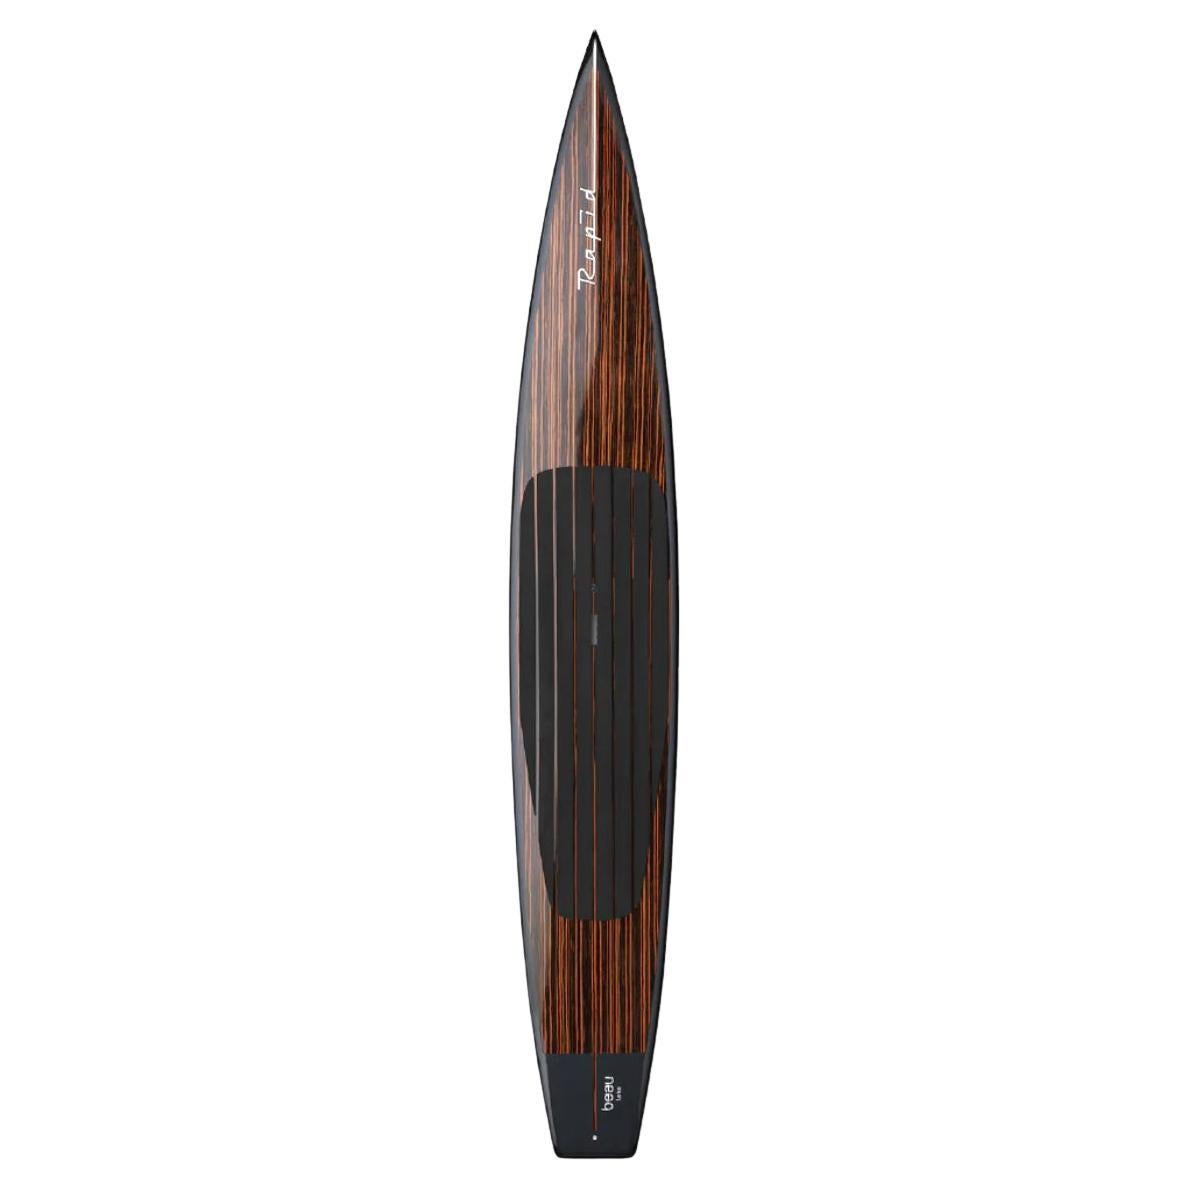 Carbon Fiber & Polished Wood Paddle Board by Beau Lake 